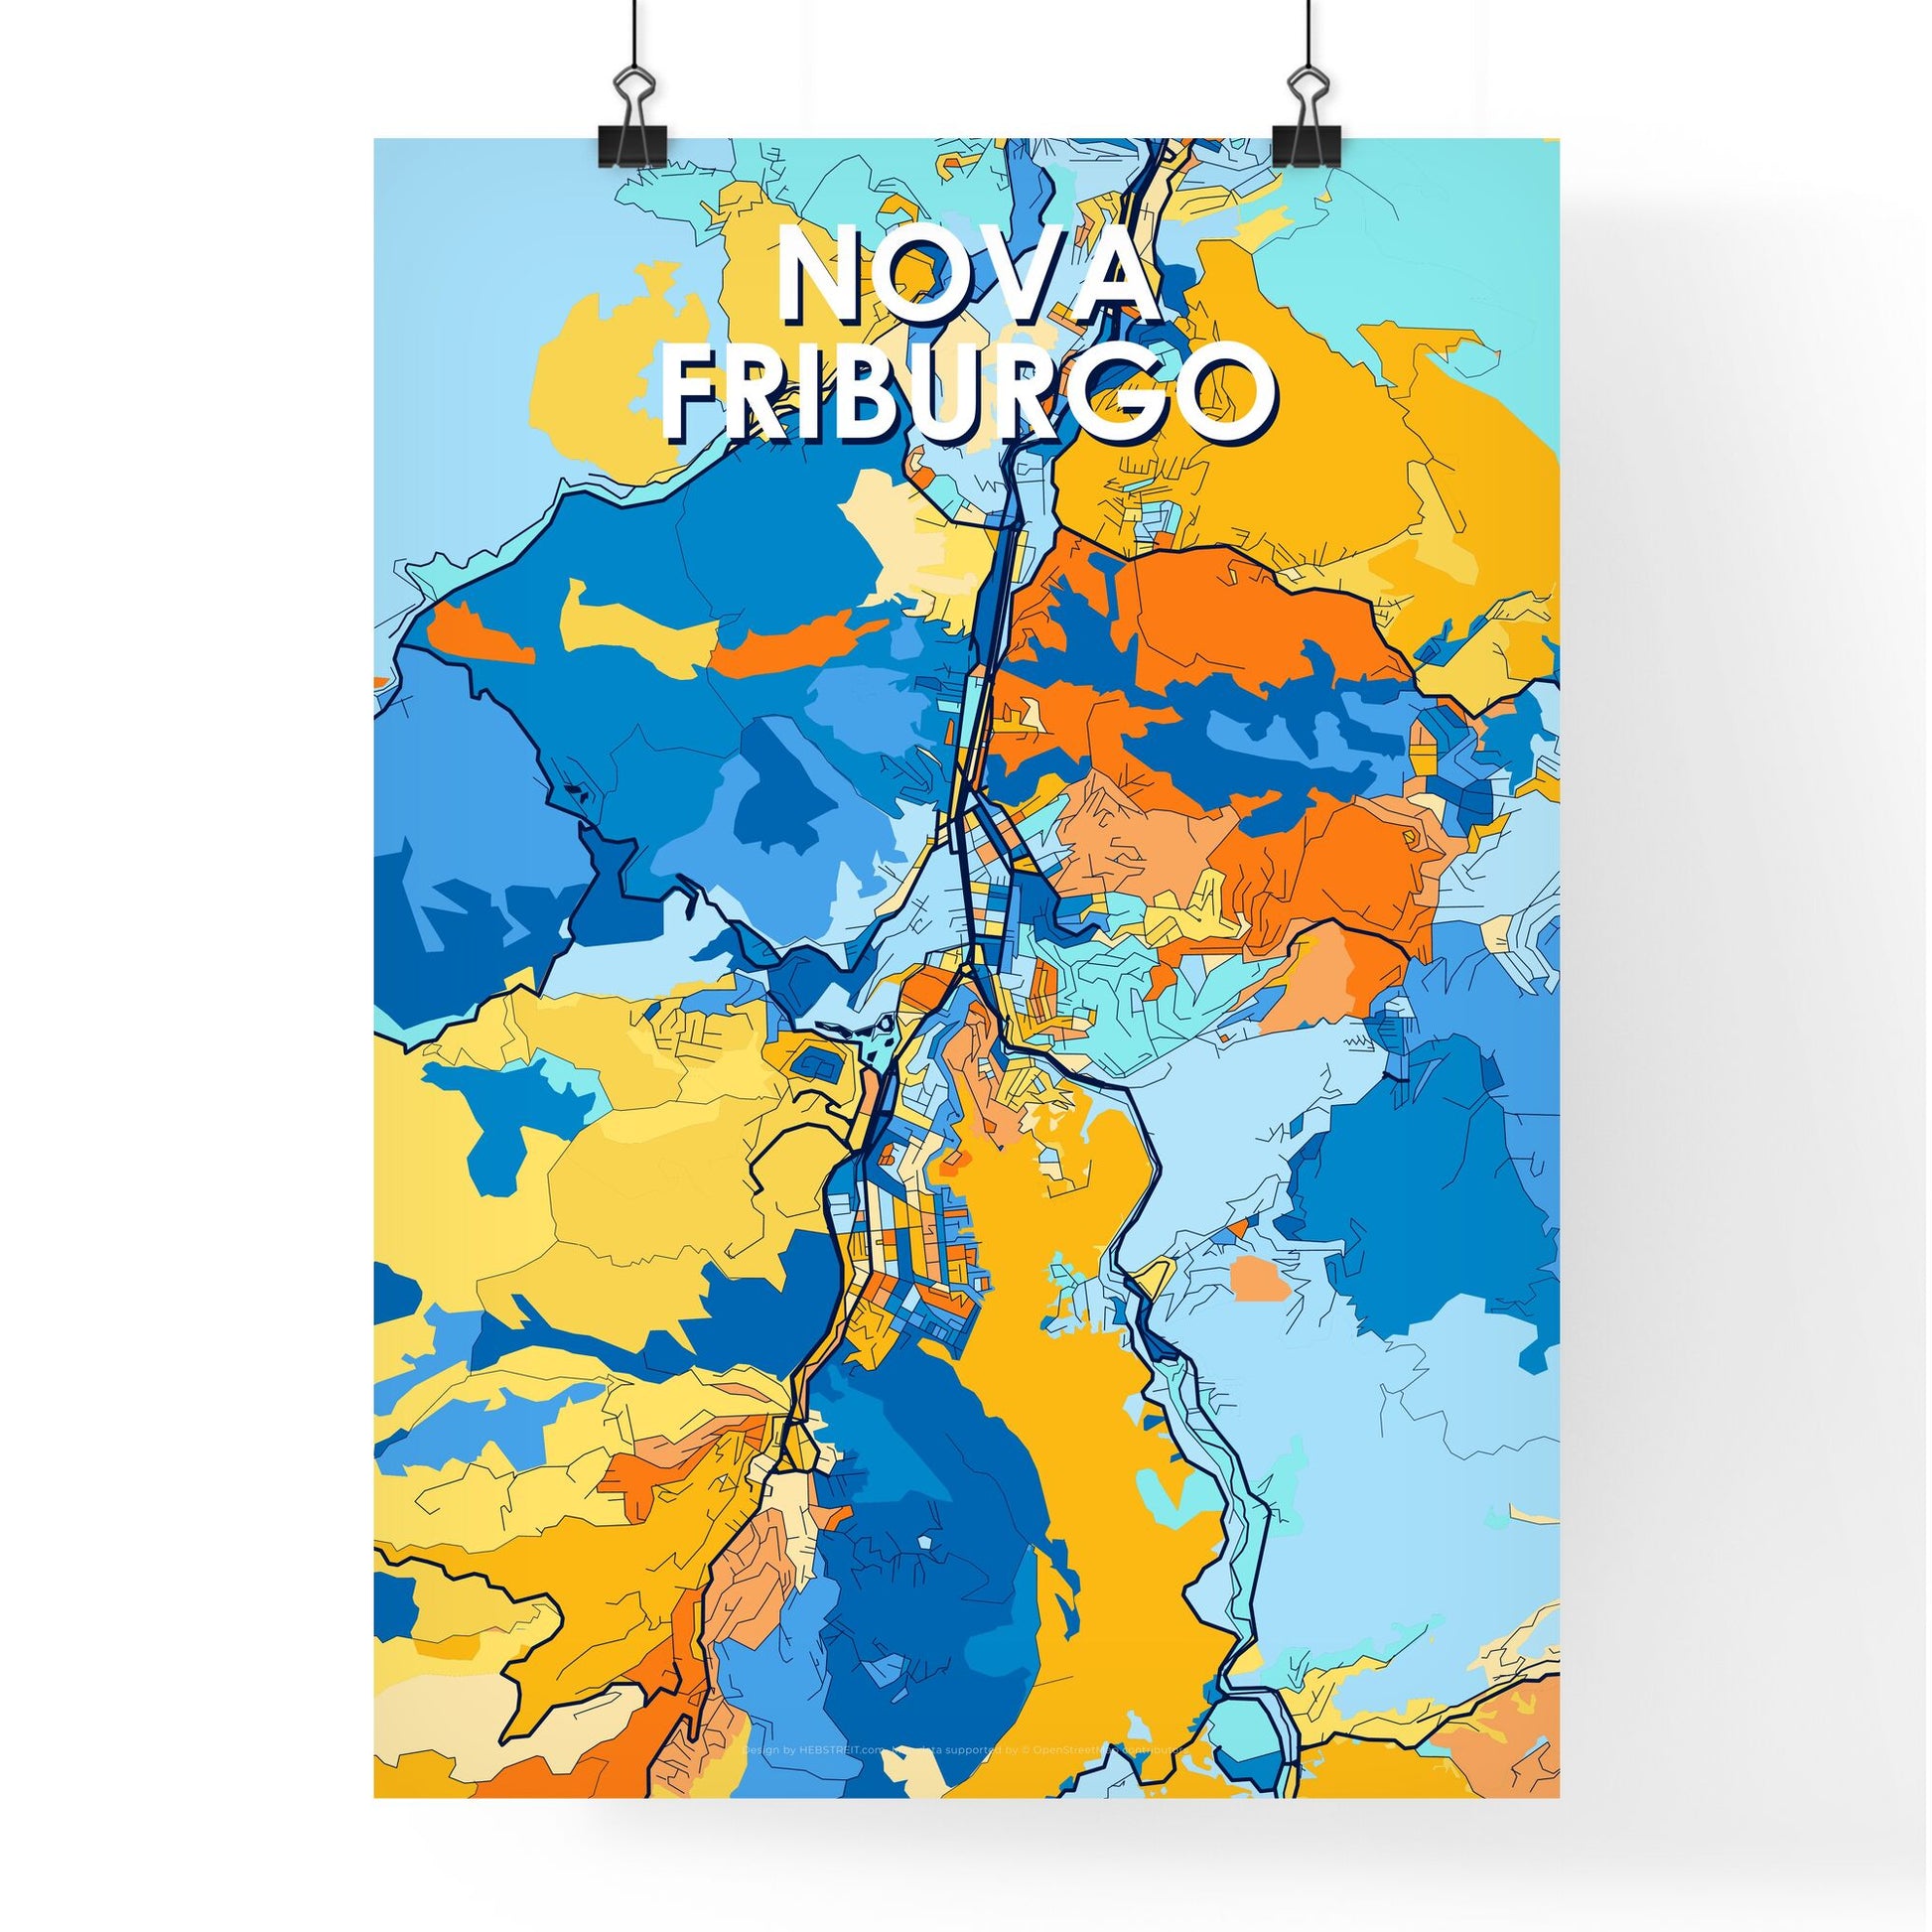 NOVA FRIBURGO BRAZIL Vibrant Colorful Art Map Poster Blue Orange